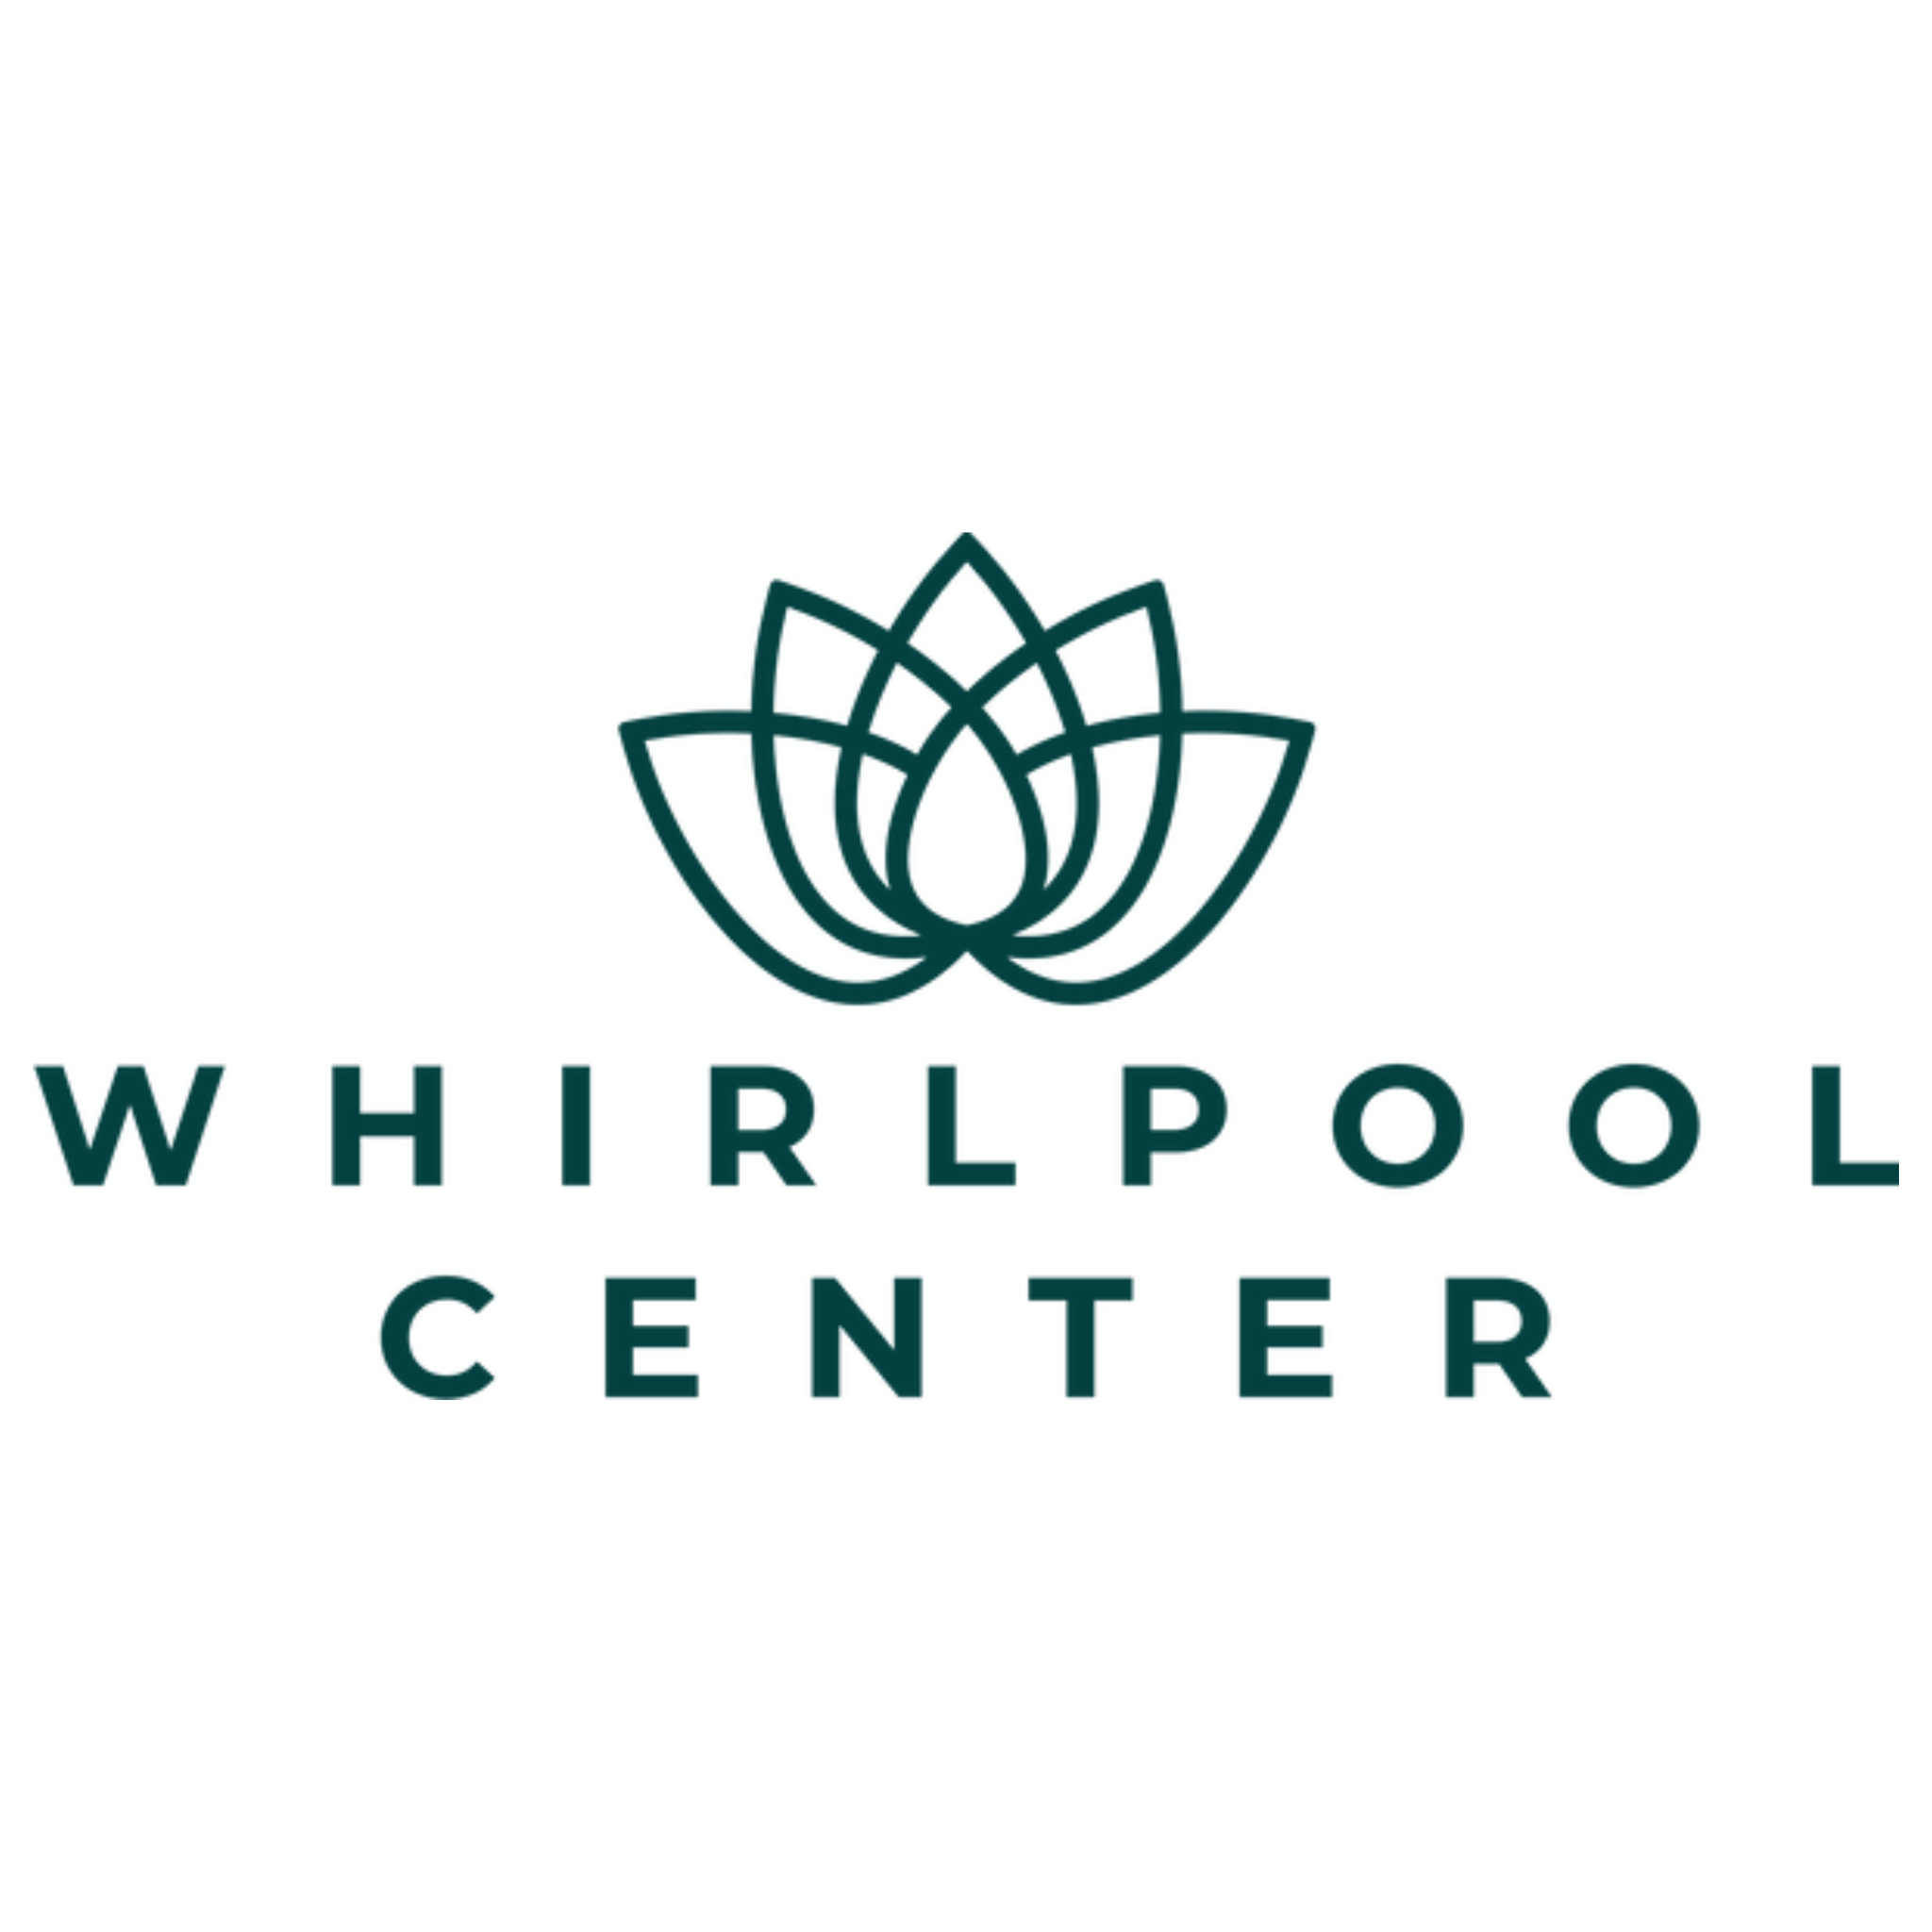 Whirlpool Center in Erbach an der Donau - Logo